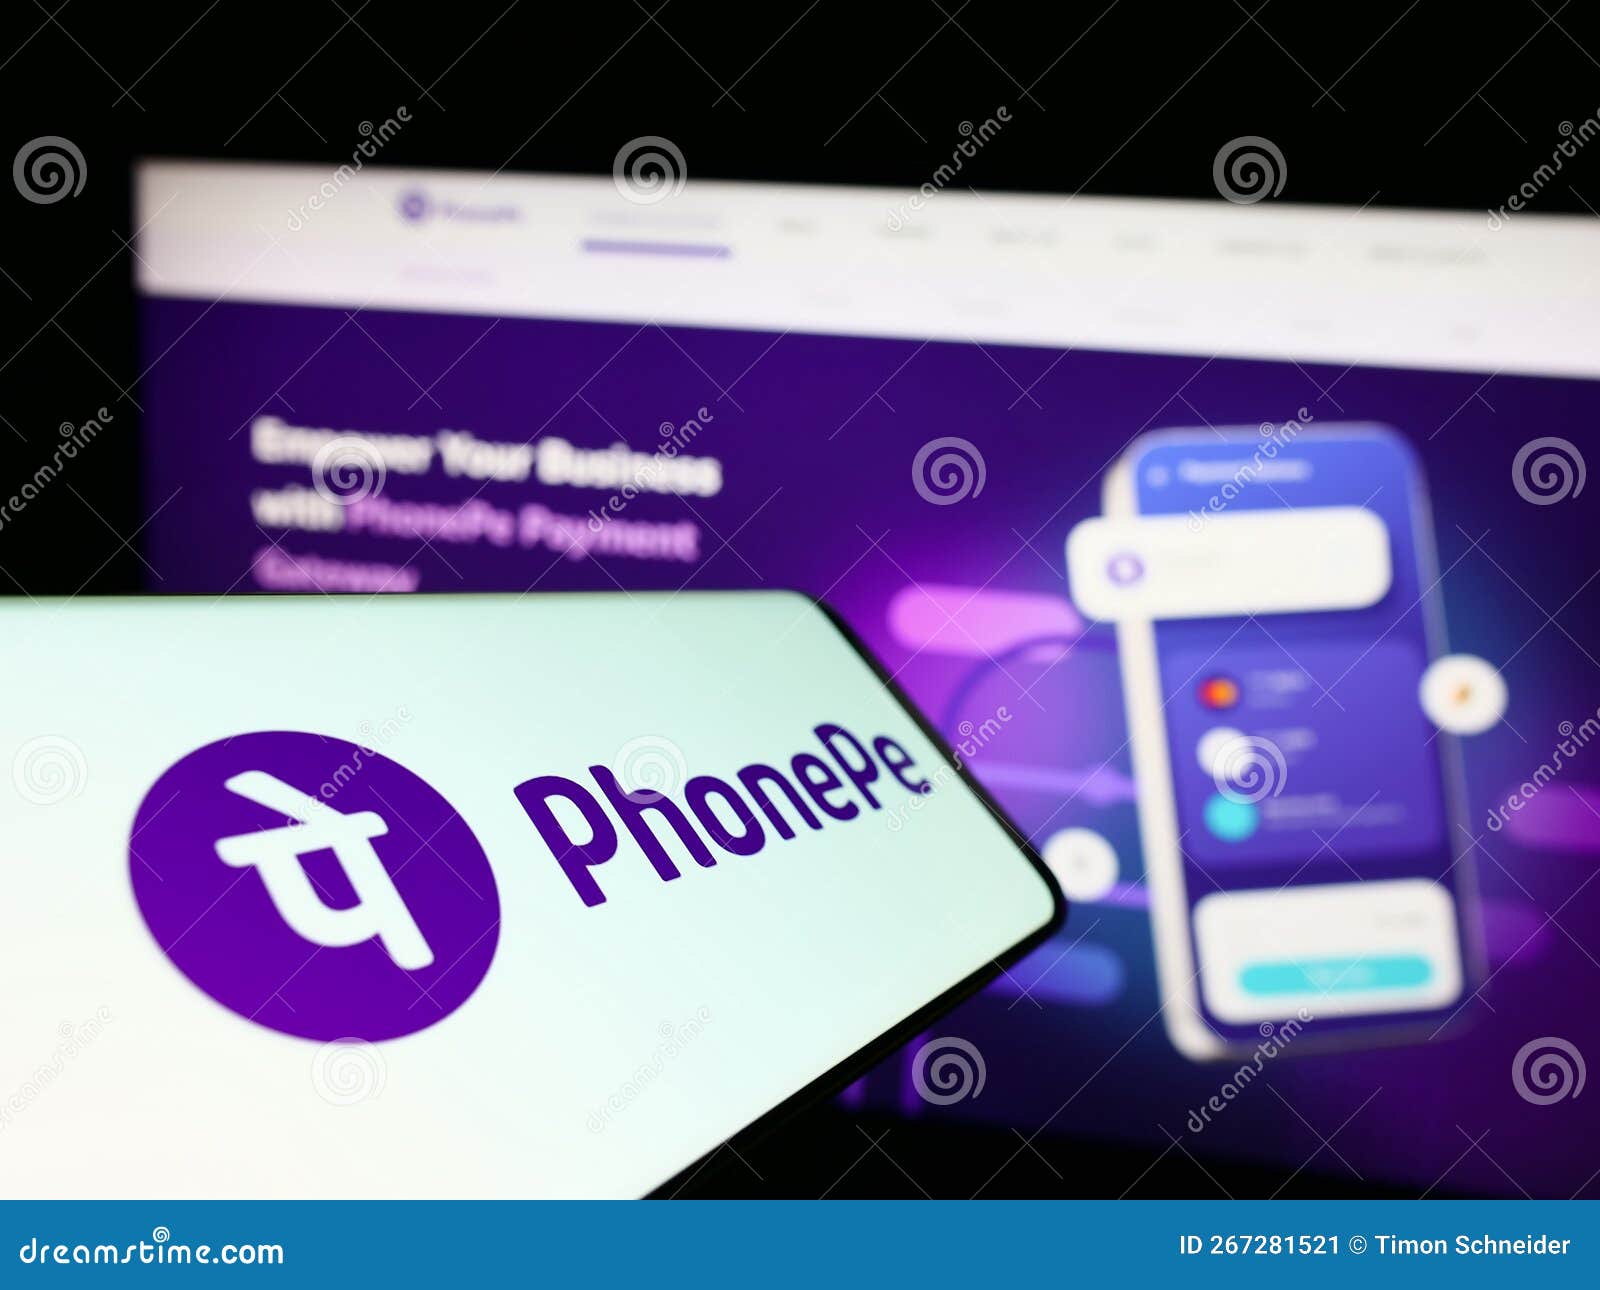 PhonePe logo - download.